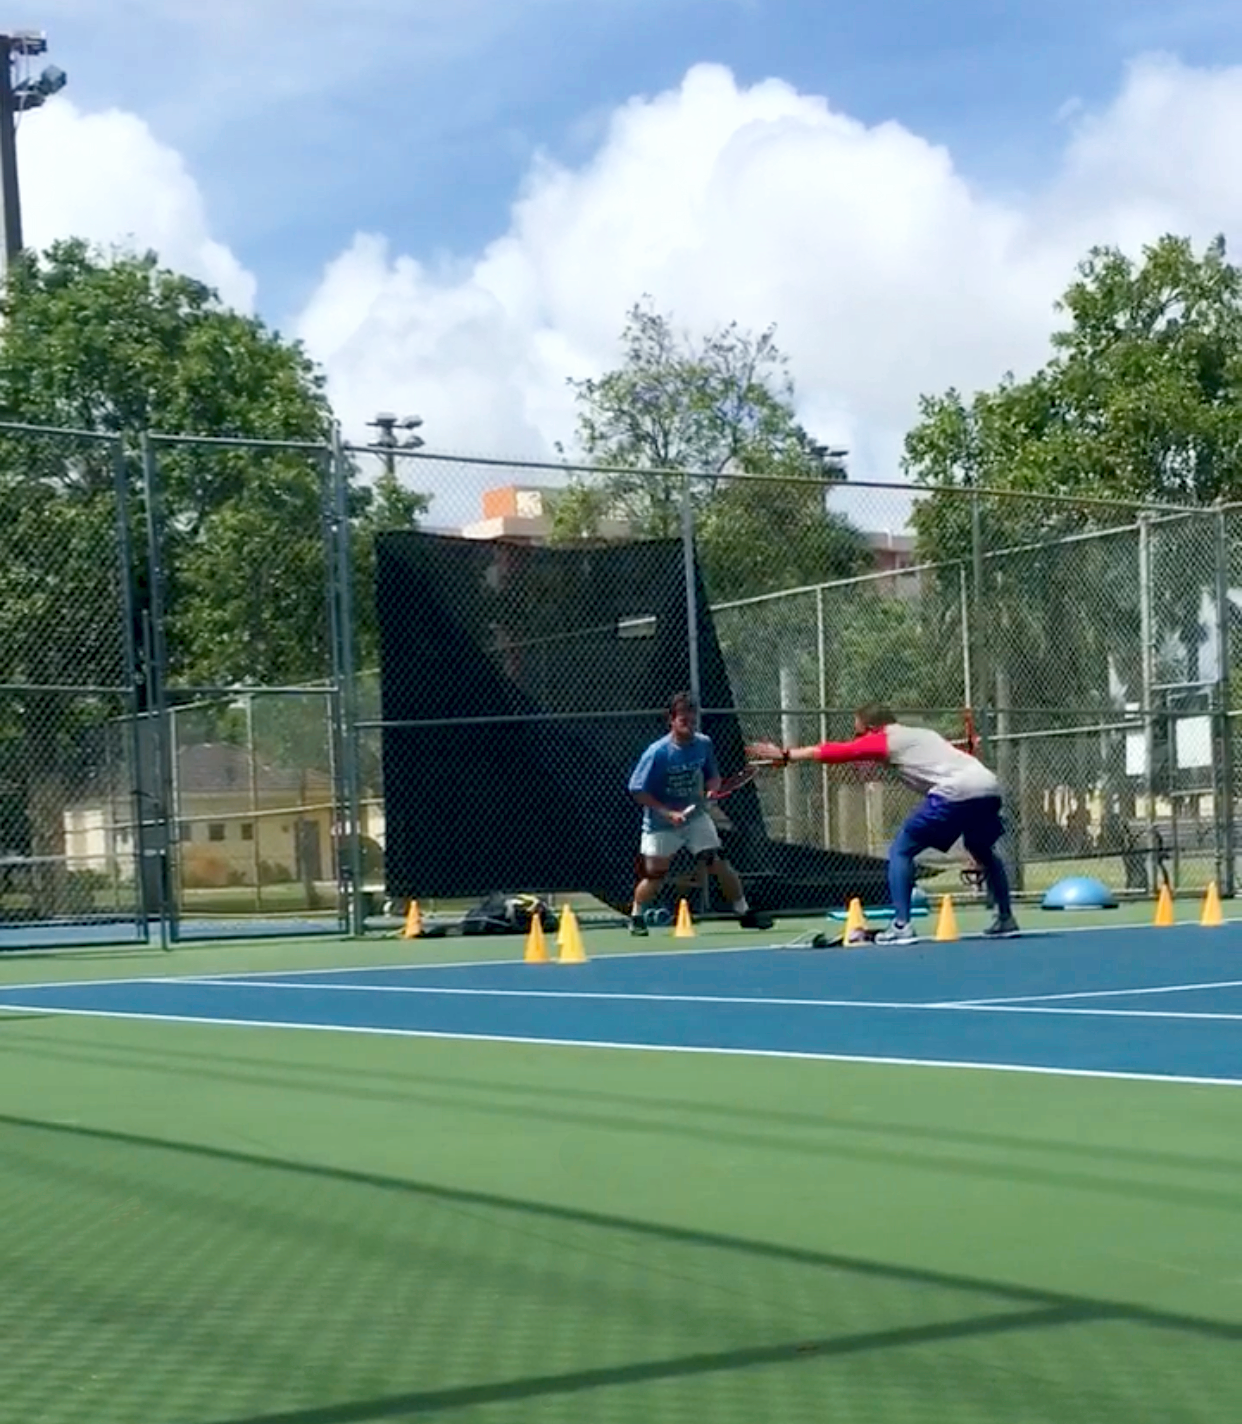 Jorge V. teaches tennis lessons in Miami, FL